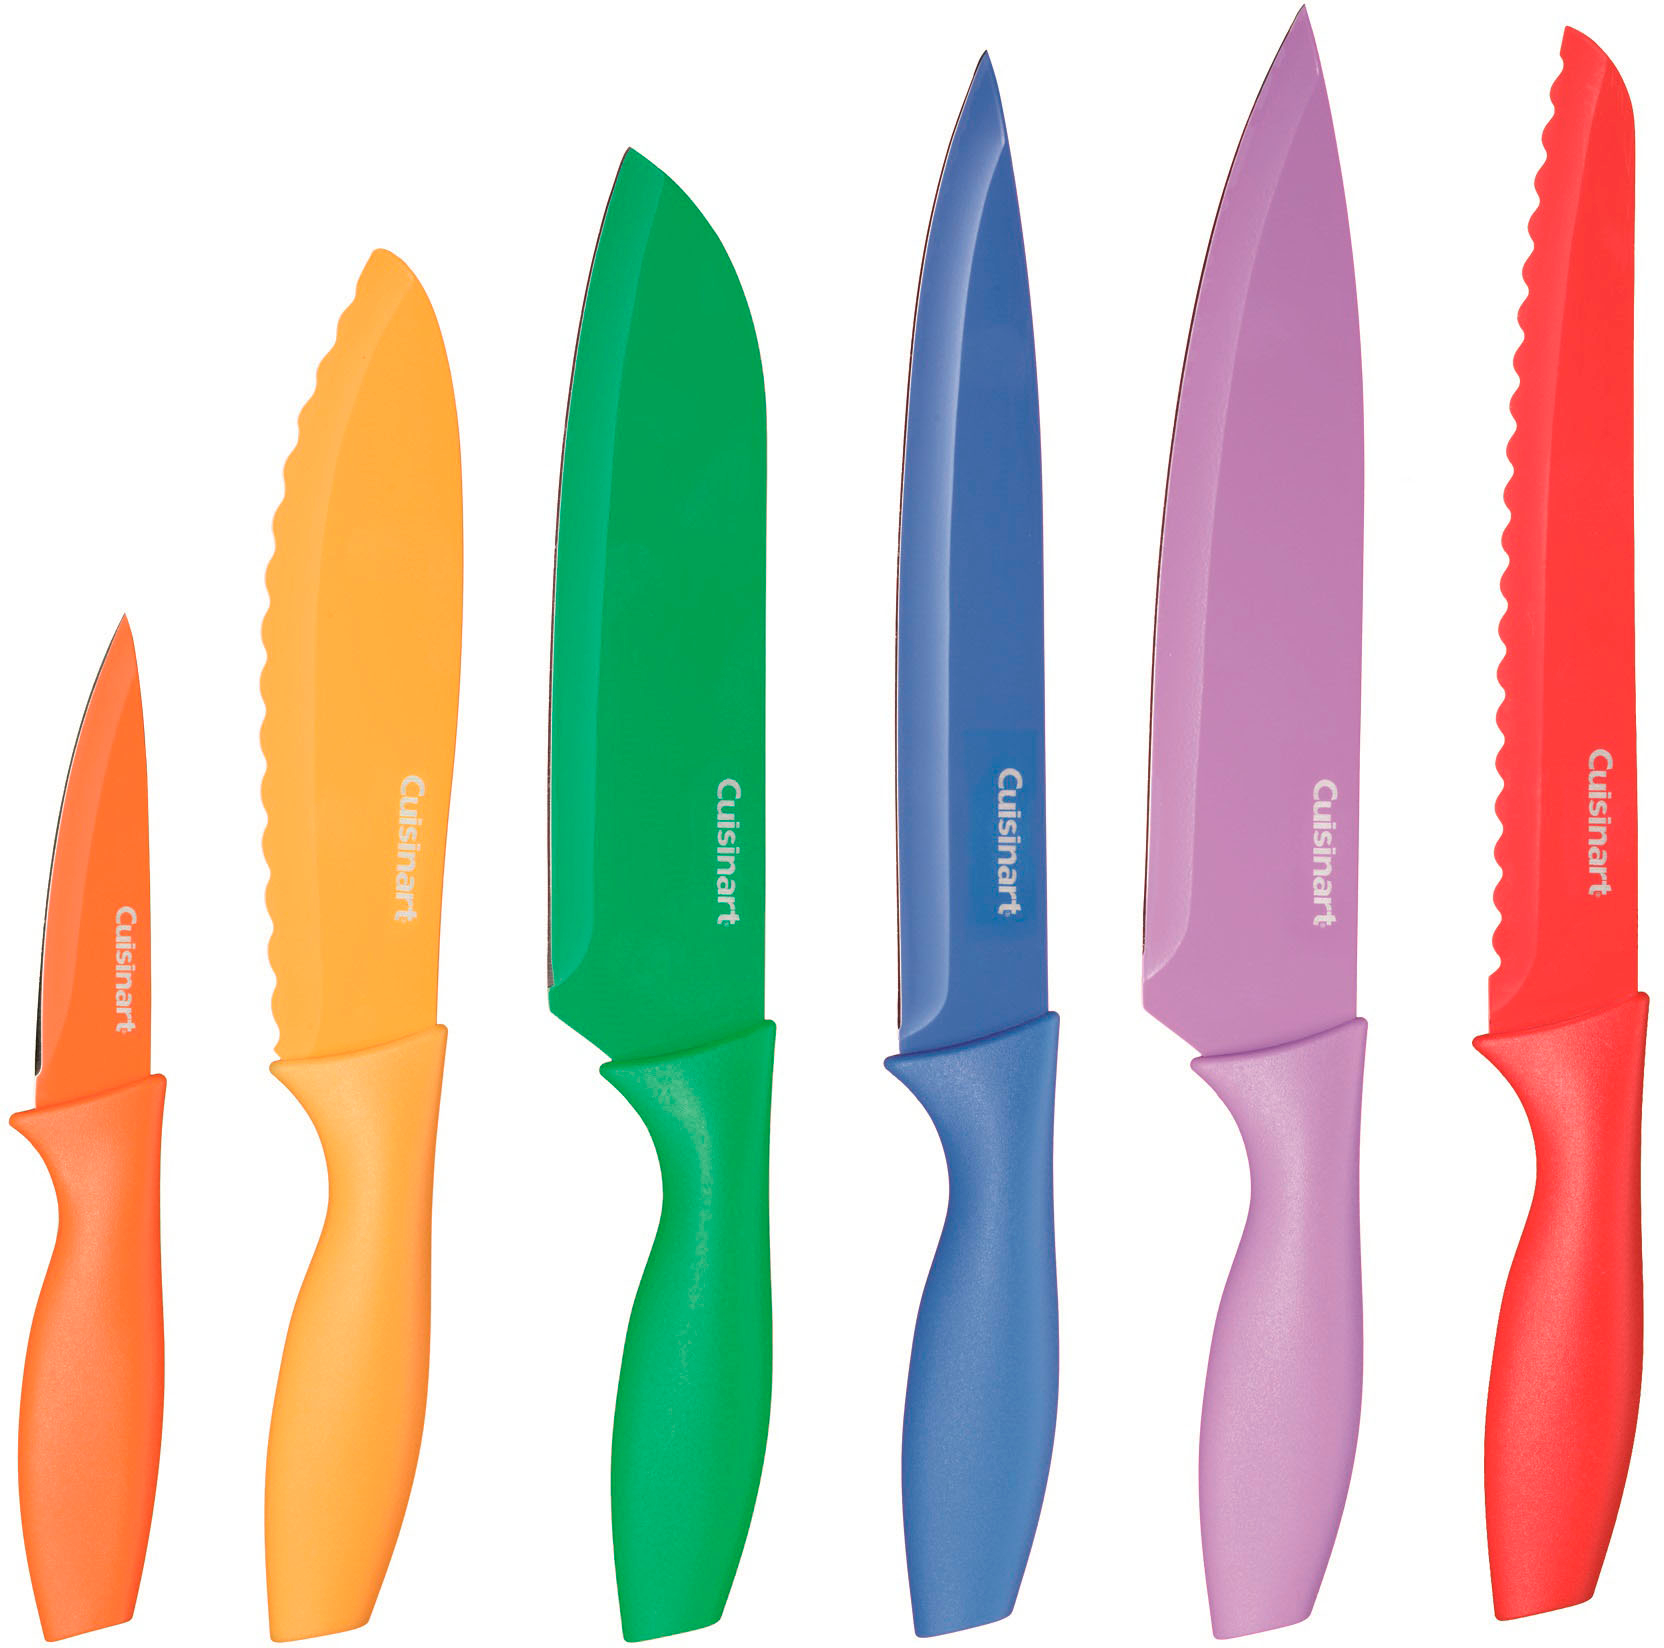 Cuisinart - 12 PC Knife Set - Best buy $12.99